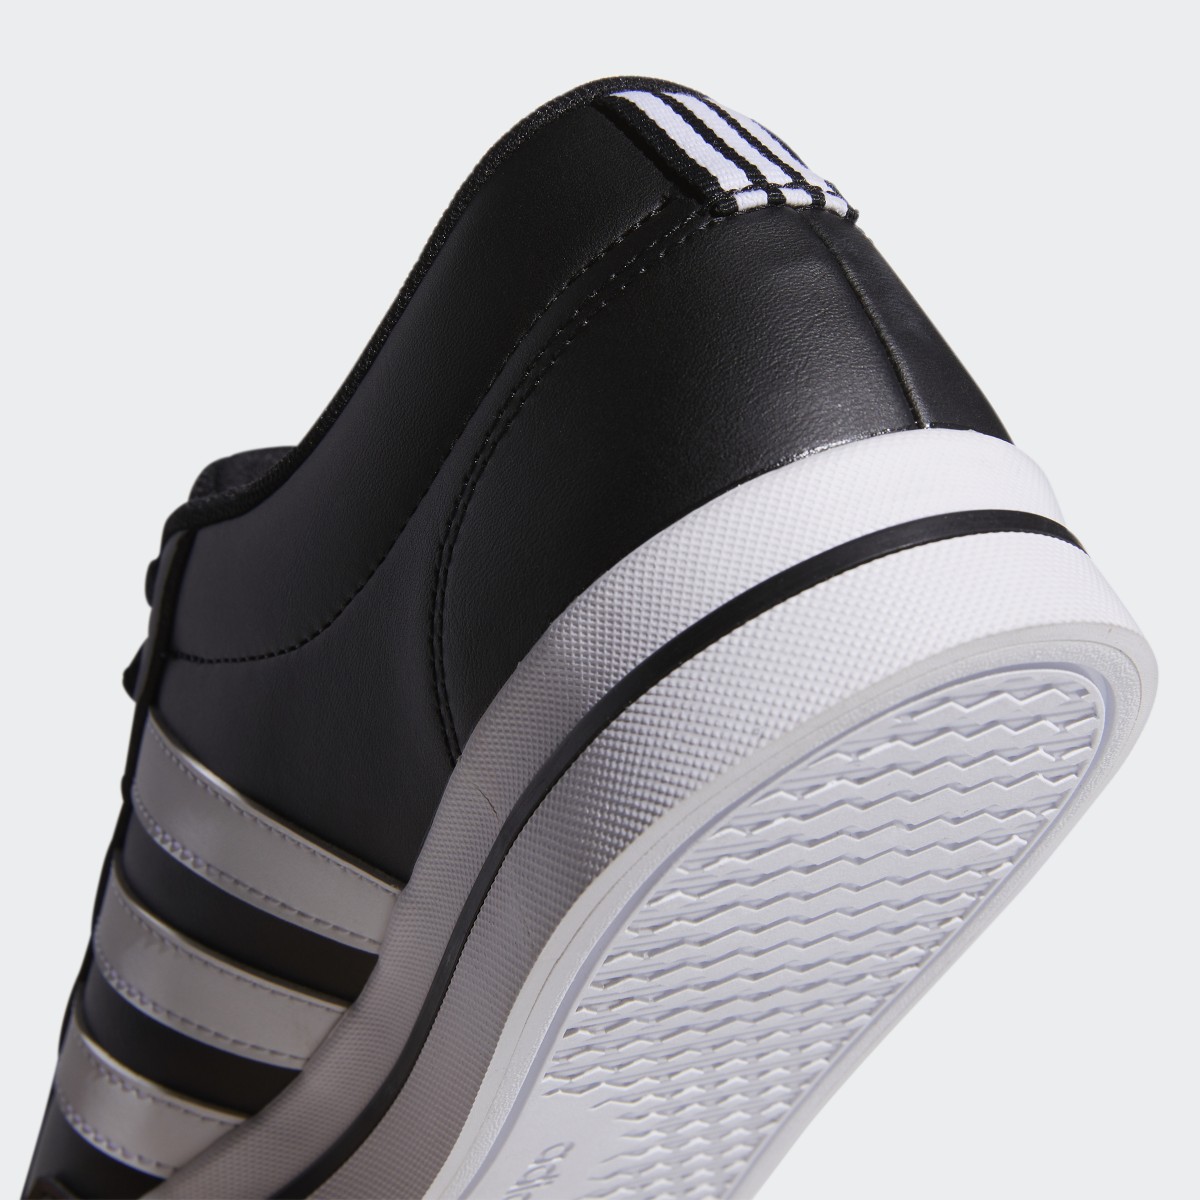 Adidas Retrovulc Lifestyle Skateboarding Shoes. 8